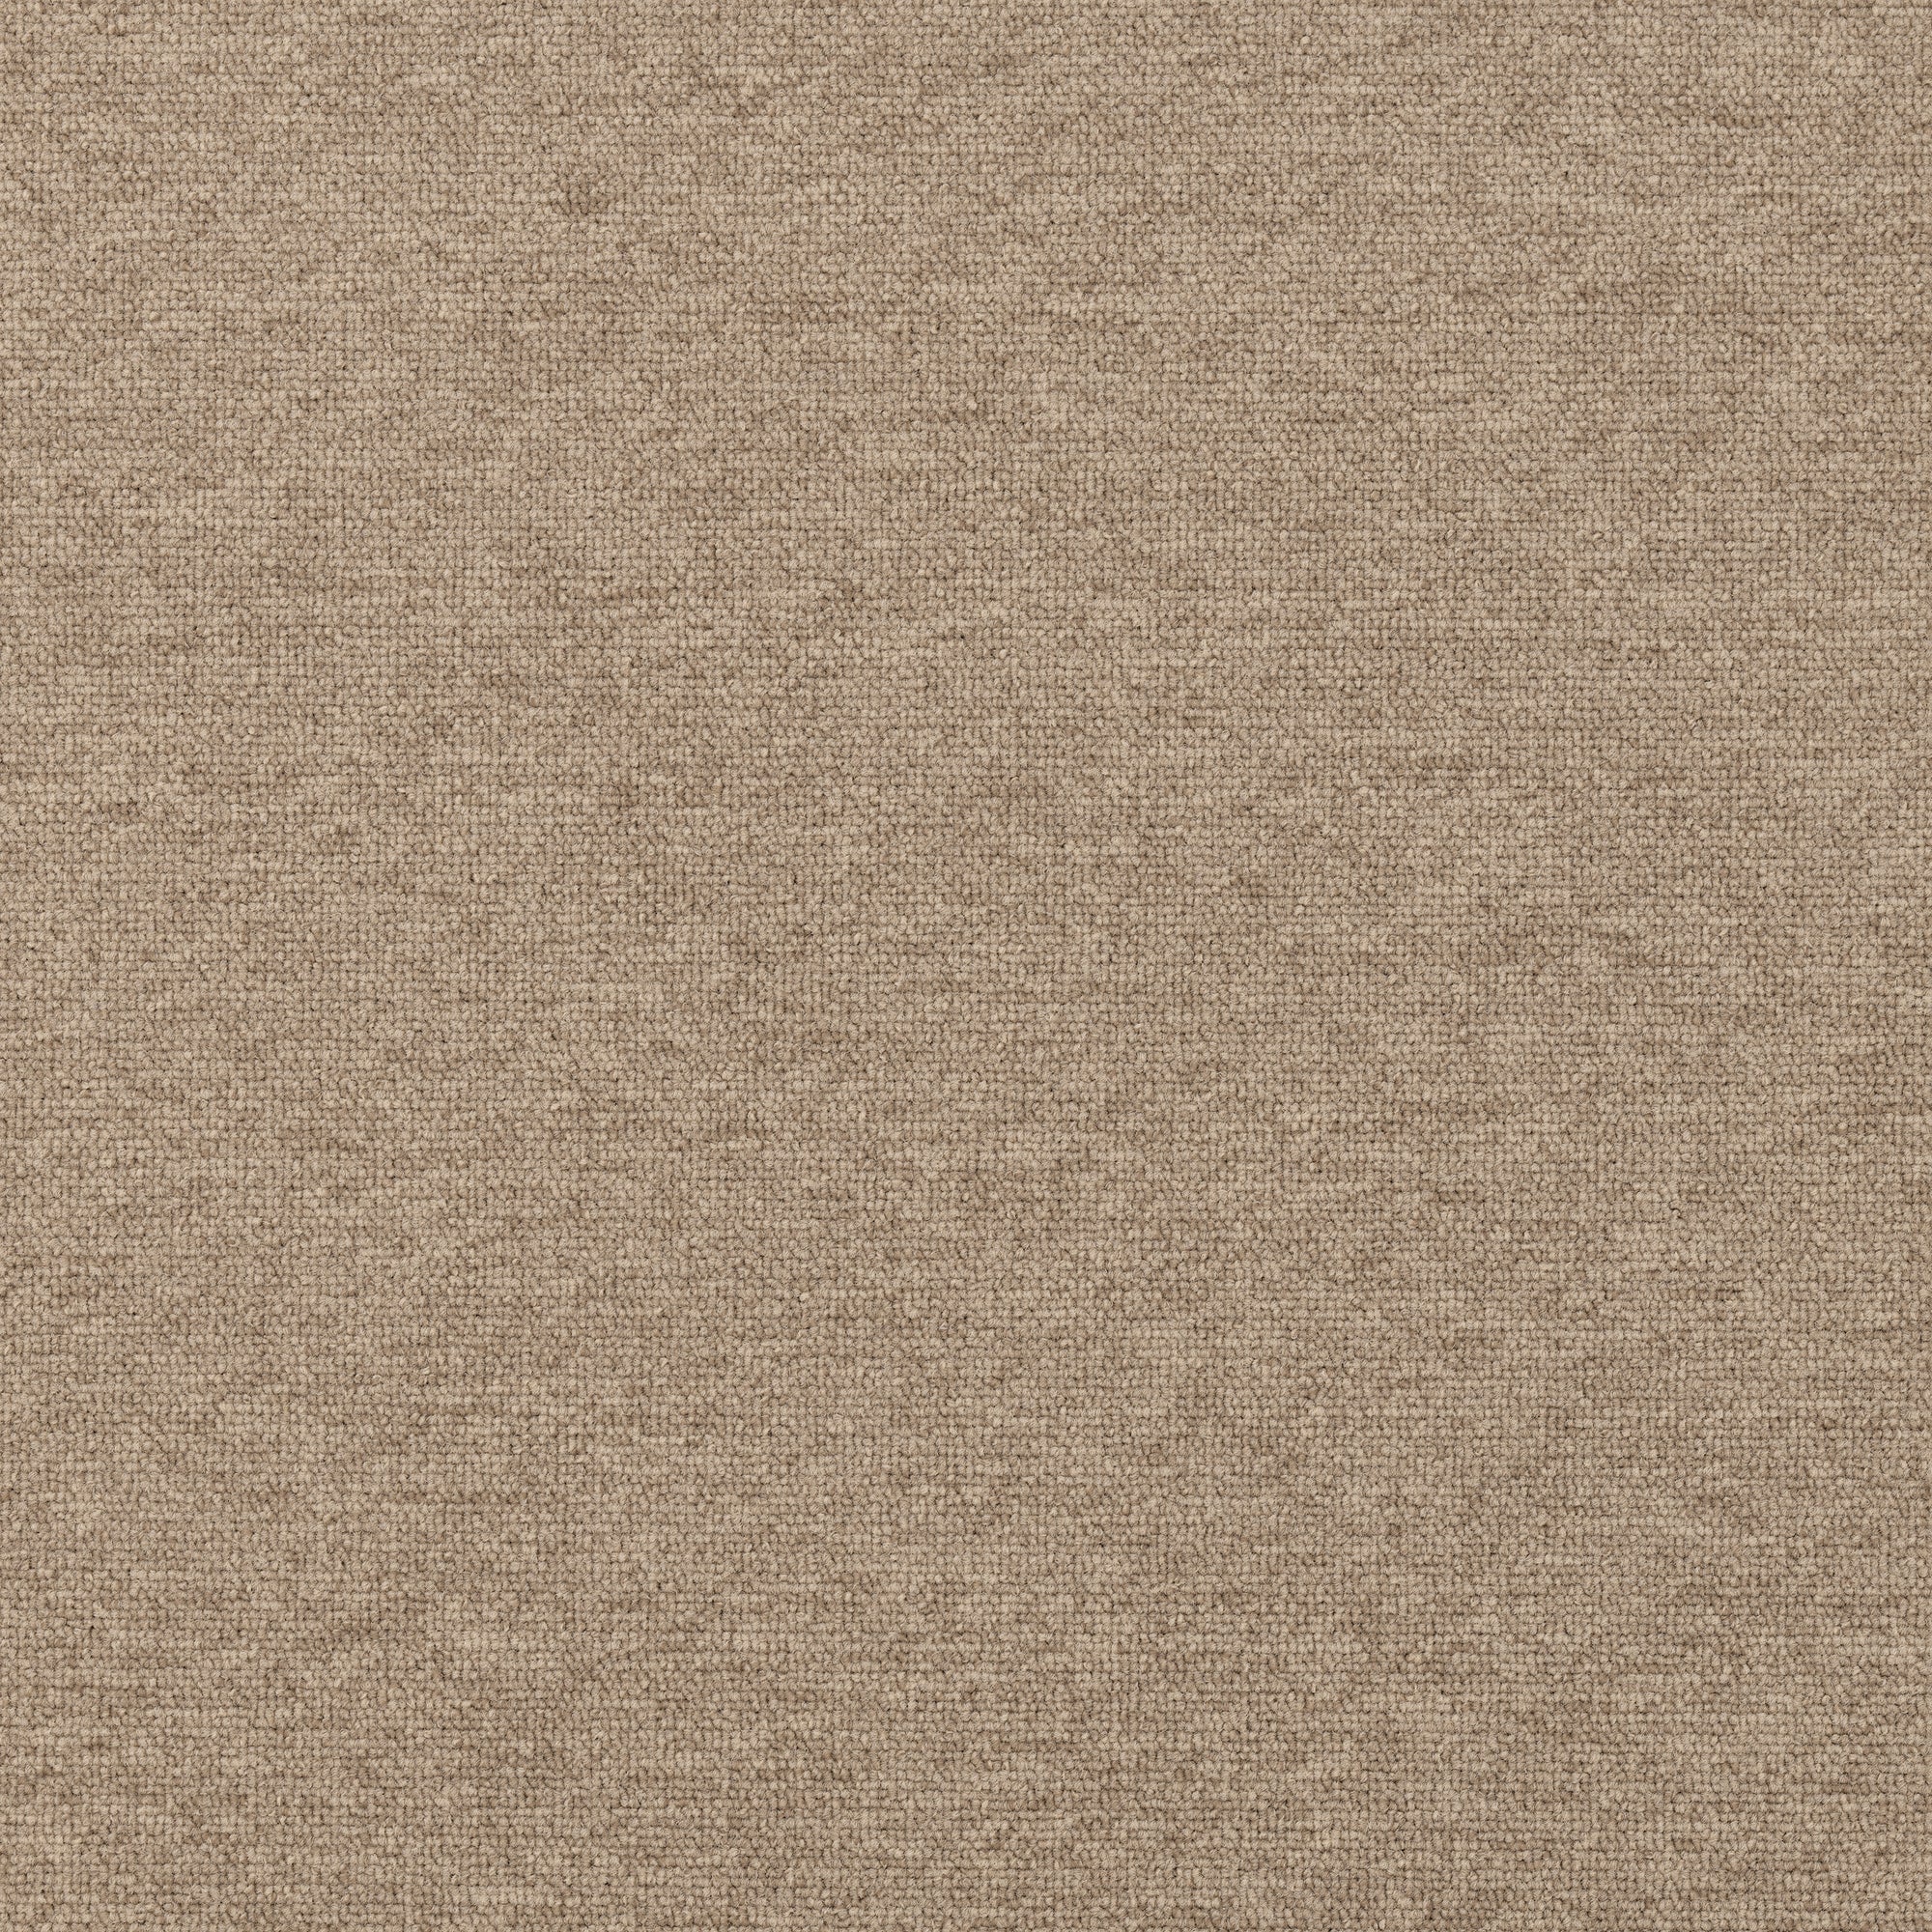 Plusfloor New Viilea Sandstone carpet tiles for offices 100% Nylon